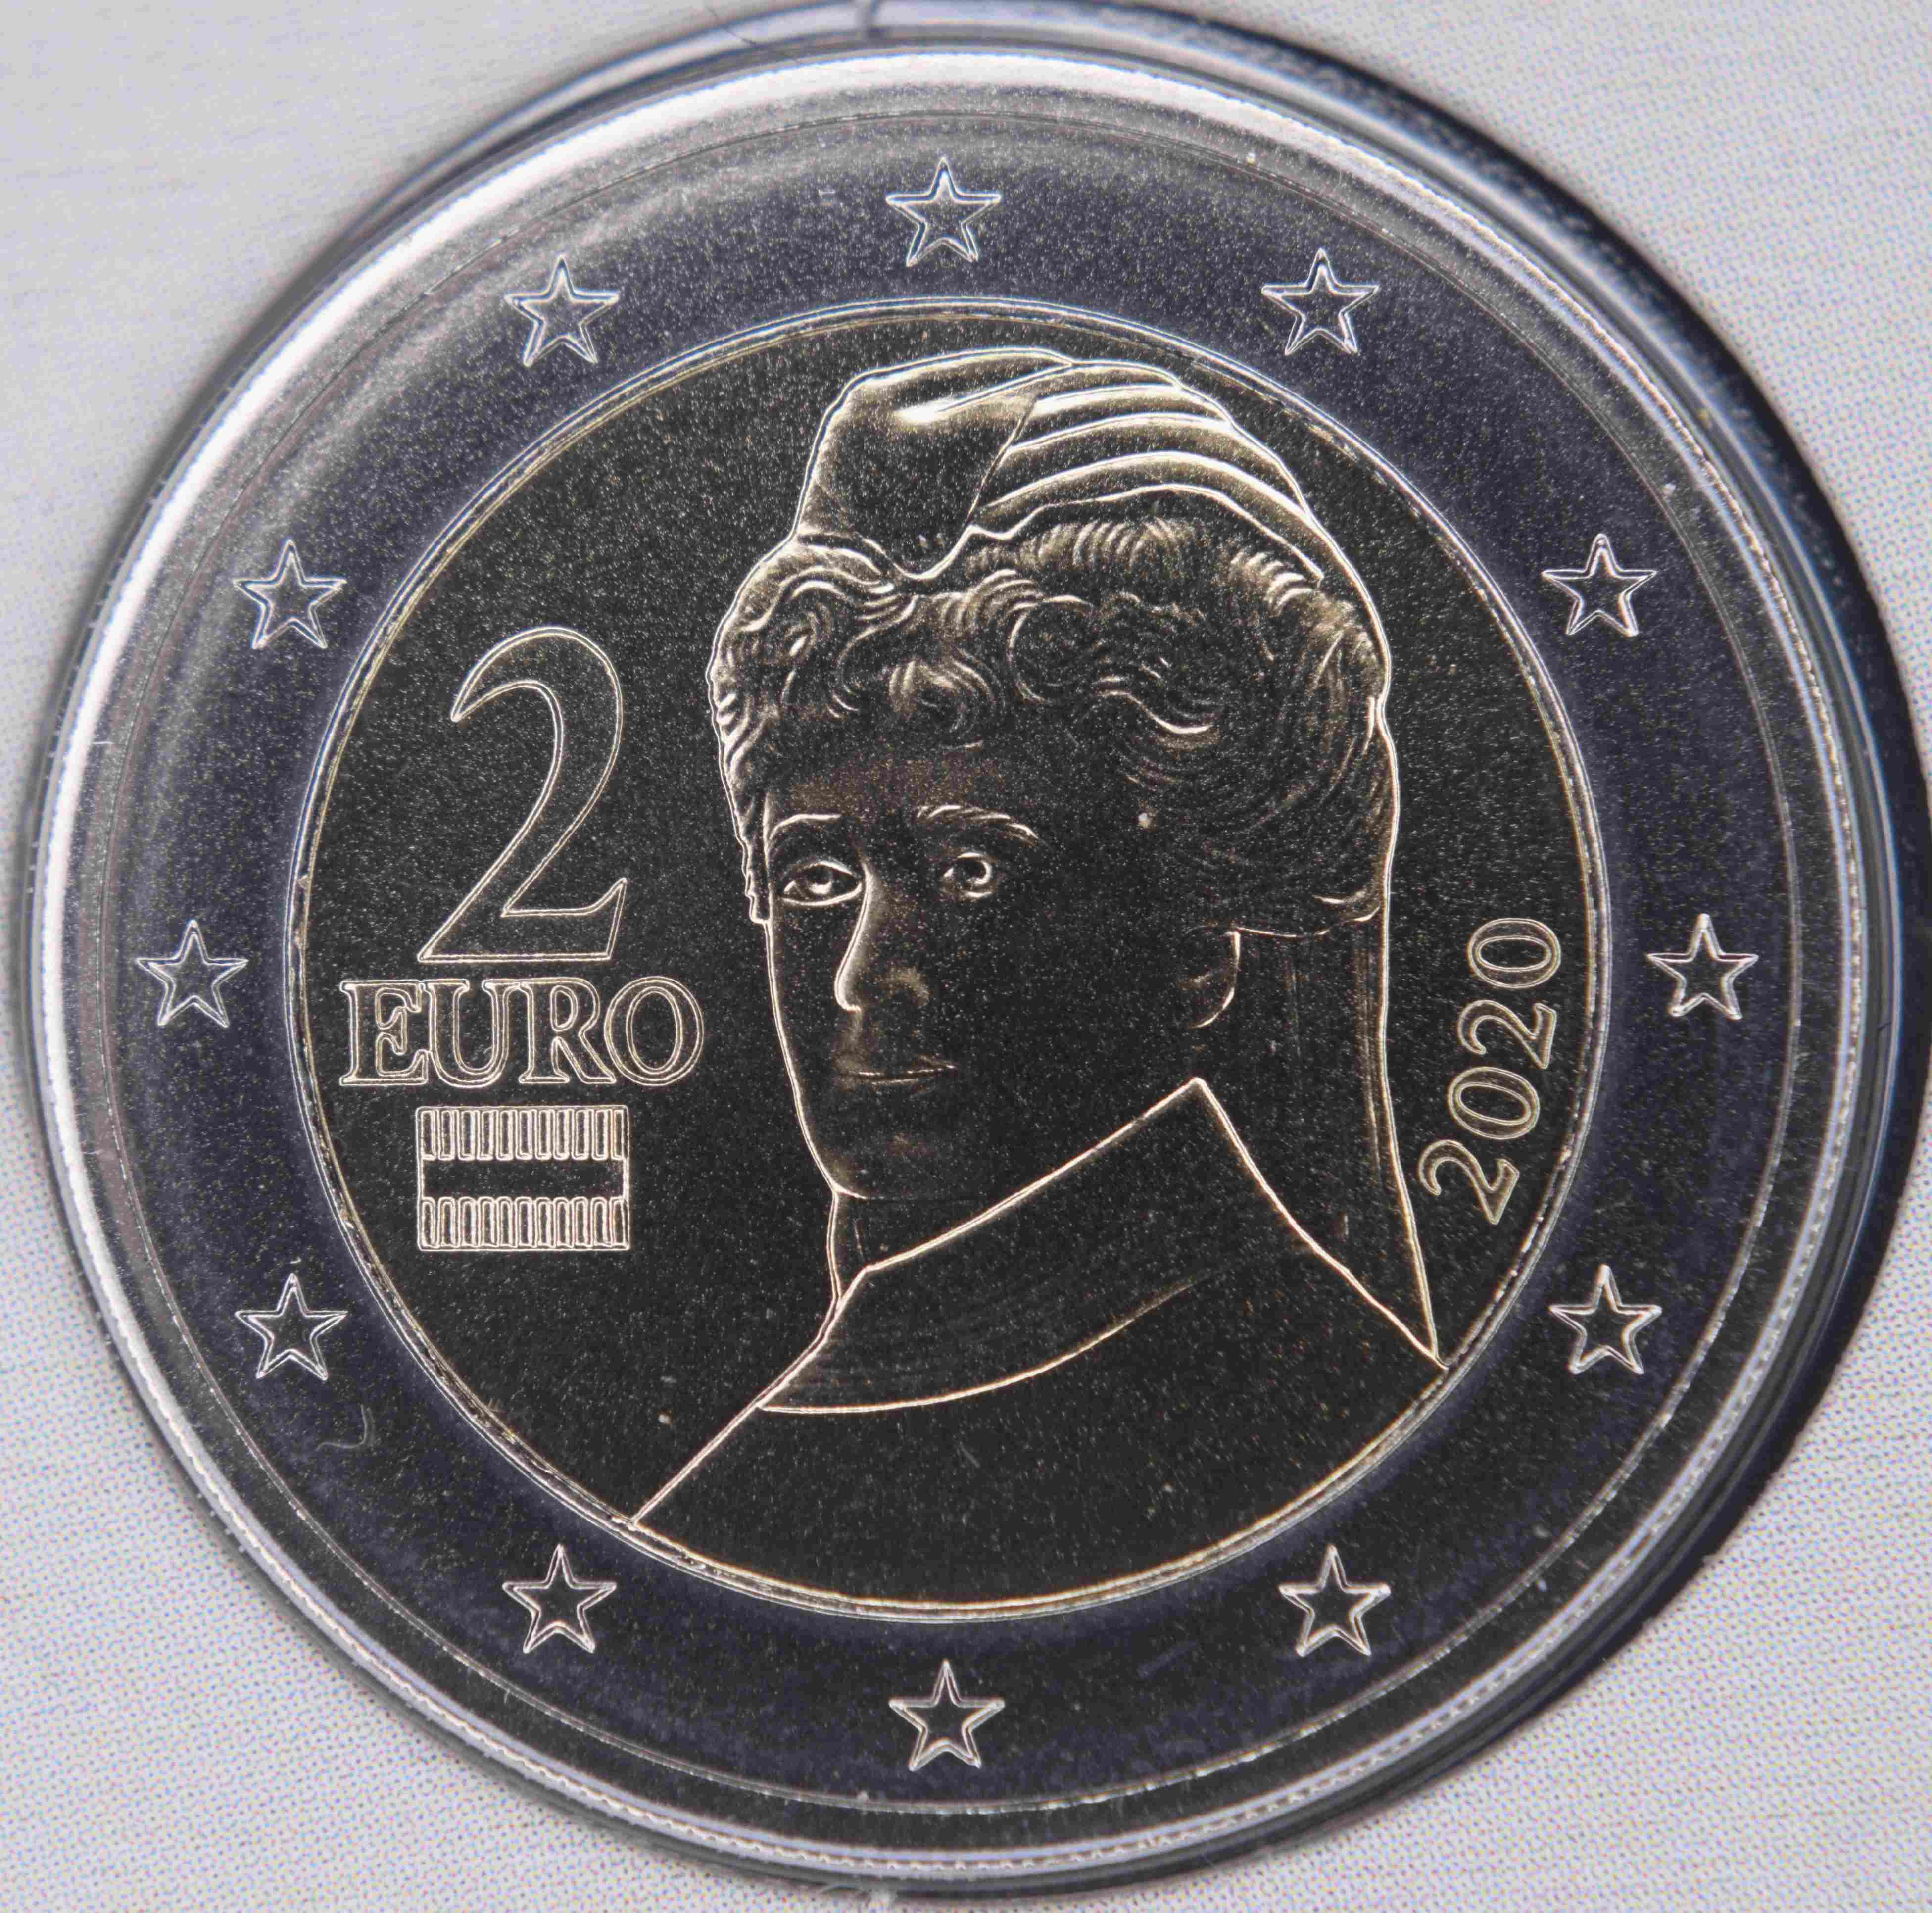 Teuerste 2 Euro Münze